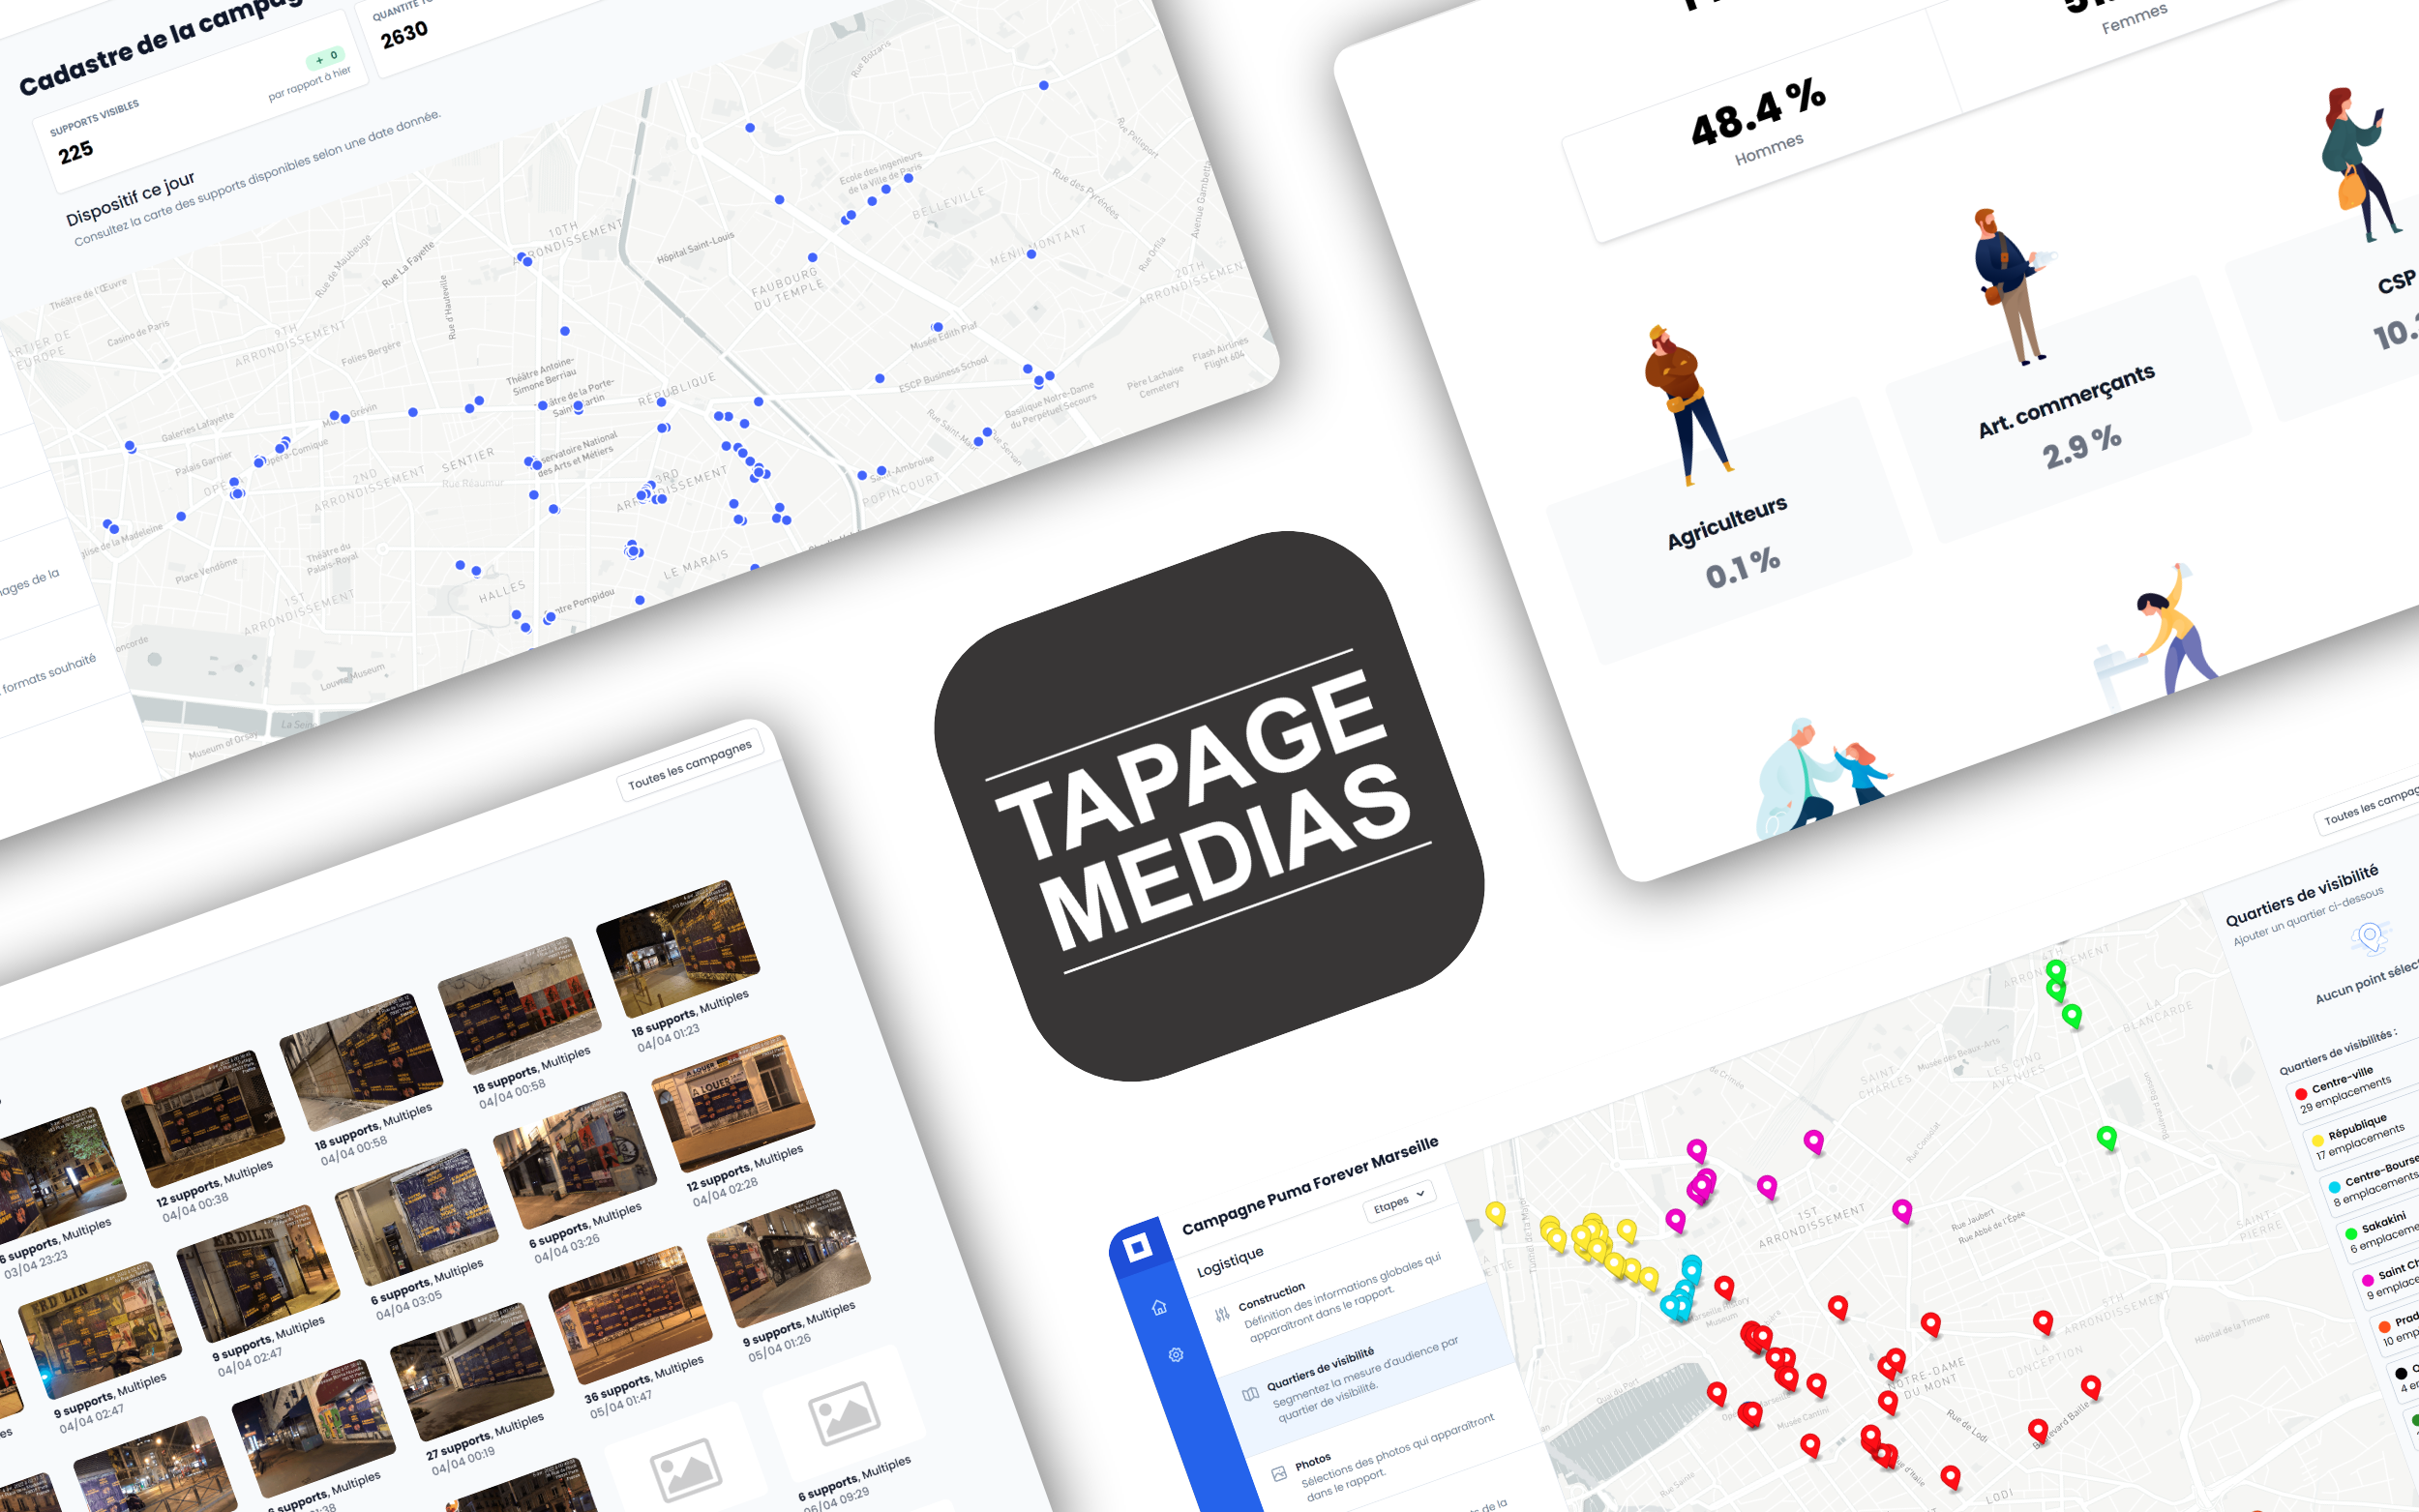 Tapage Medias Marseille software screenshot